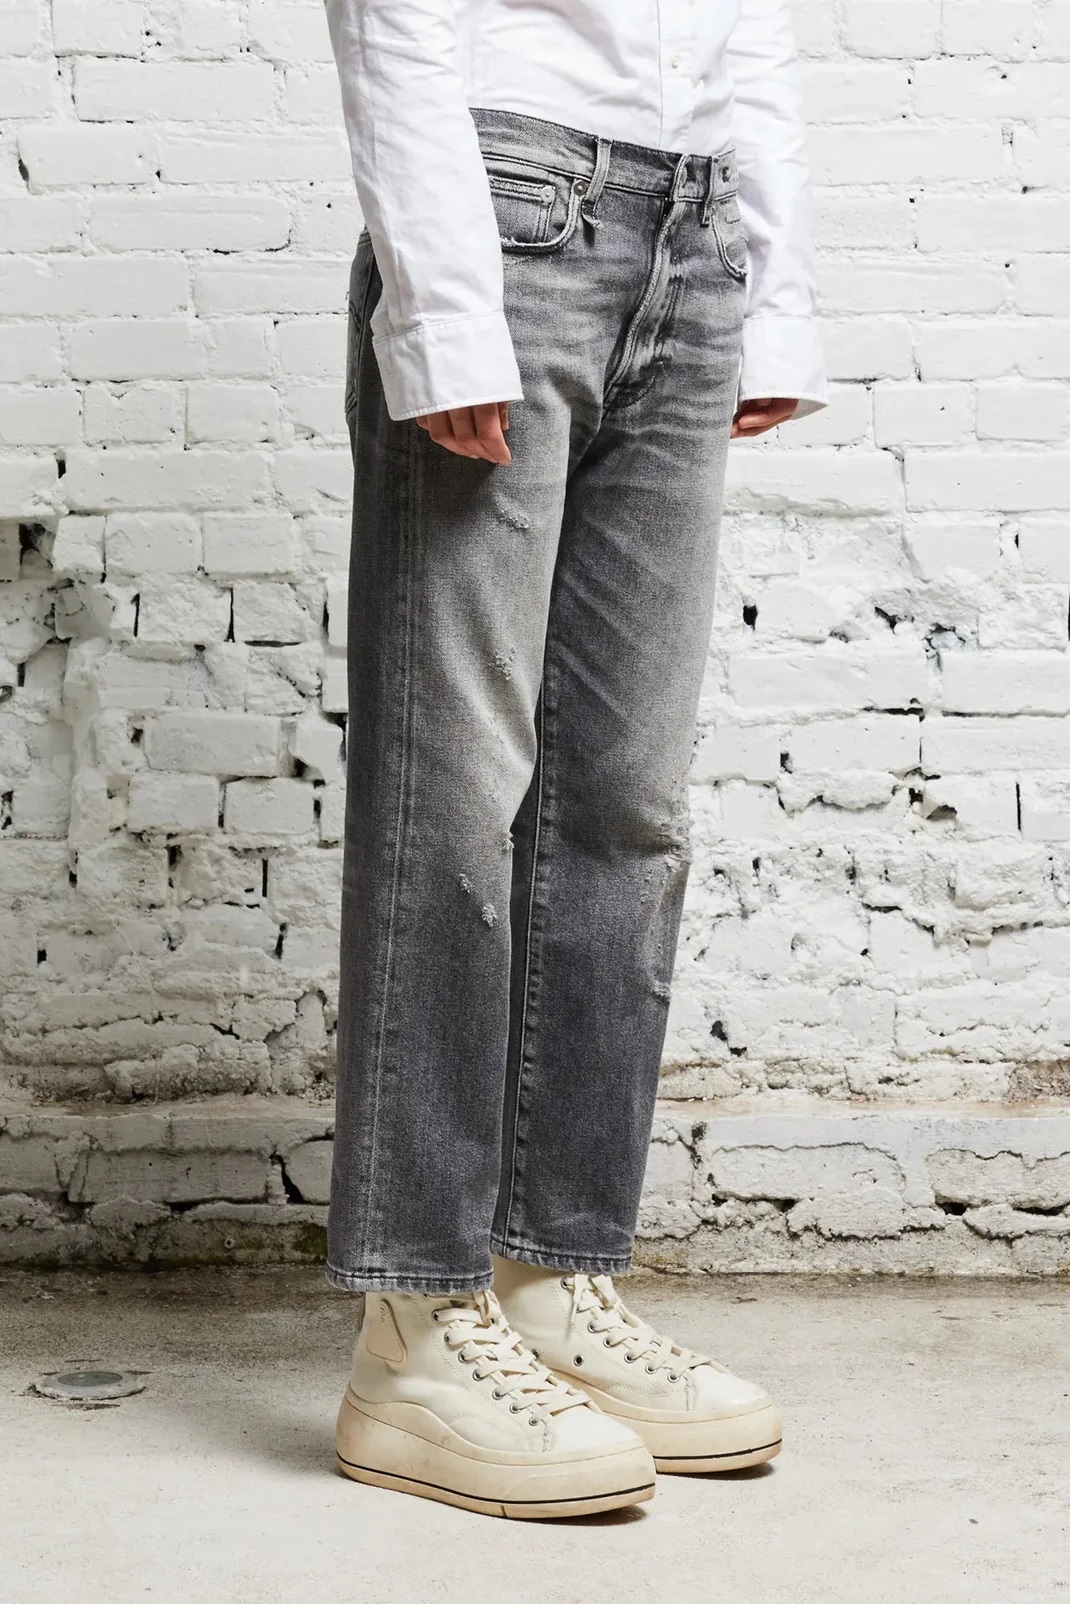 R13 Boyfriend Jeans in Vintage Grey 24